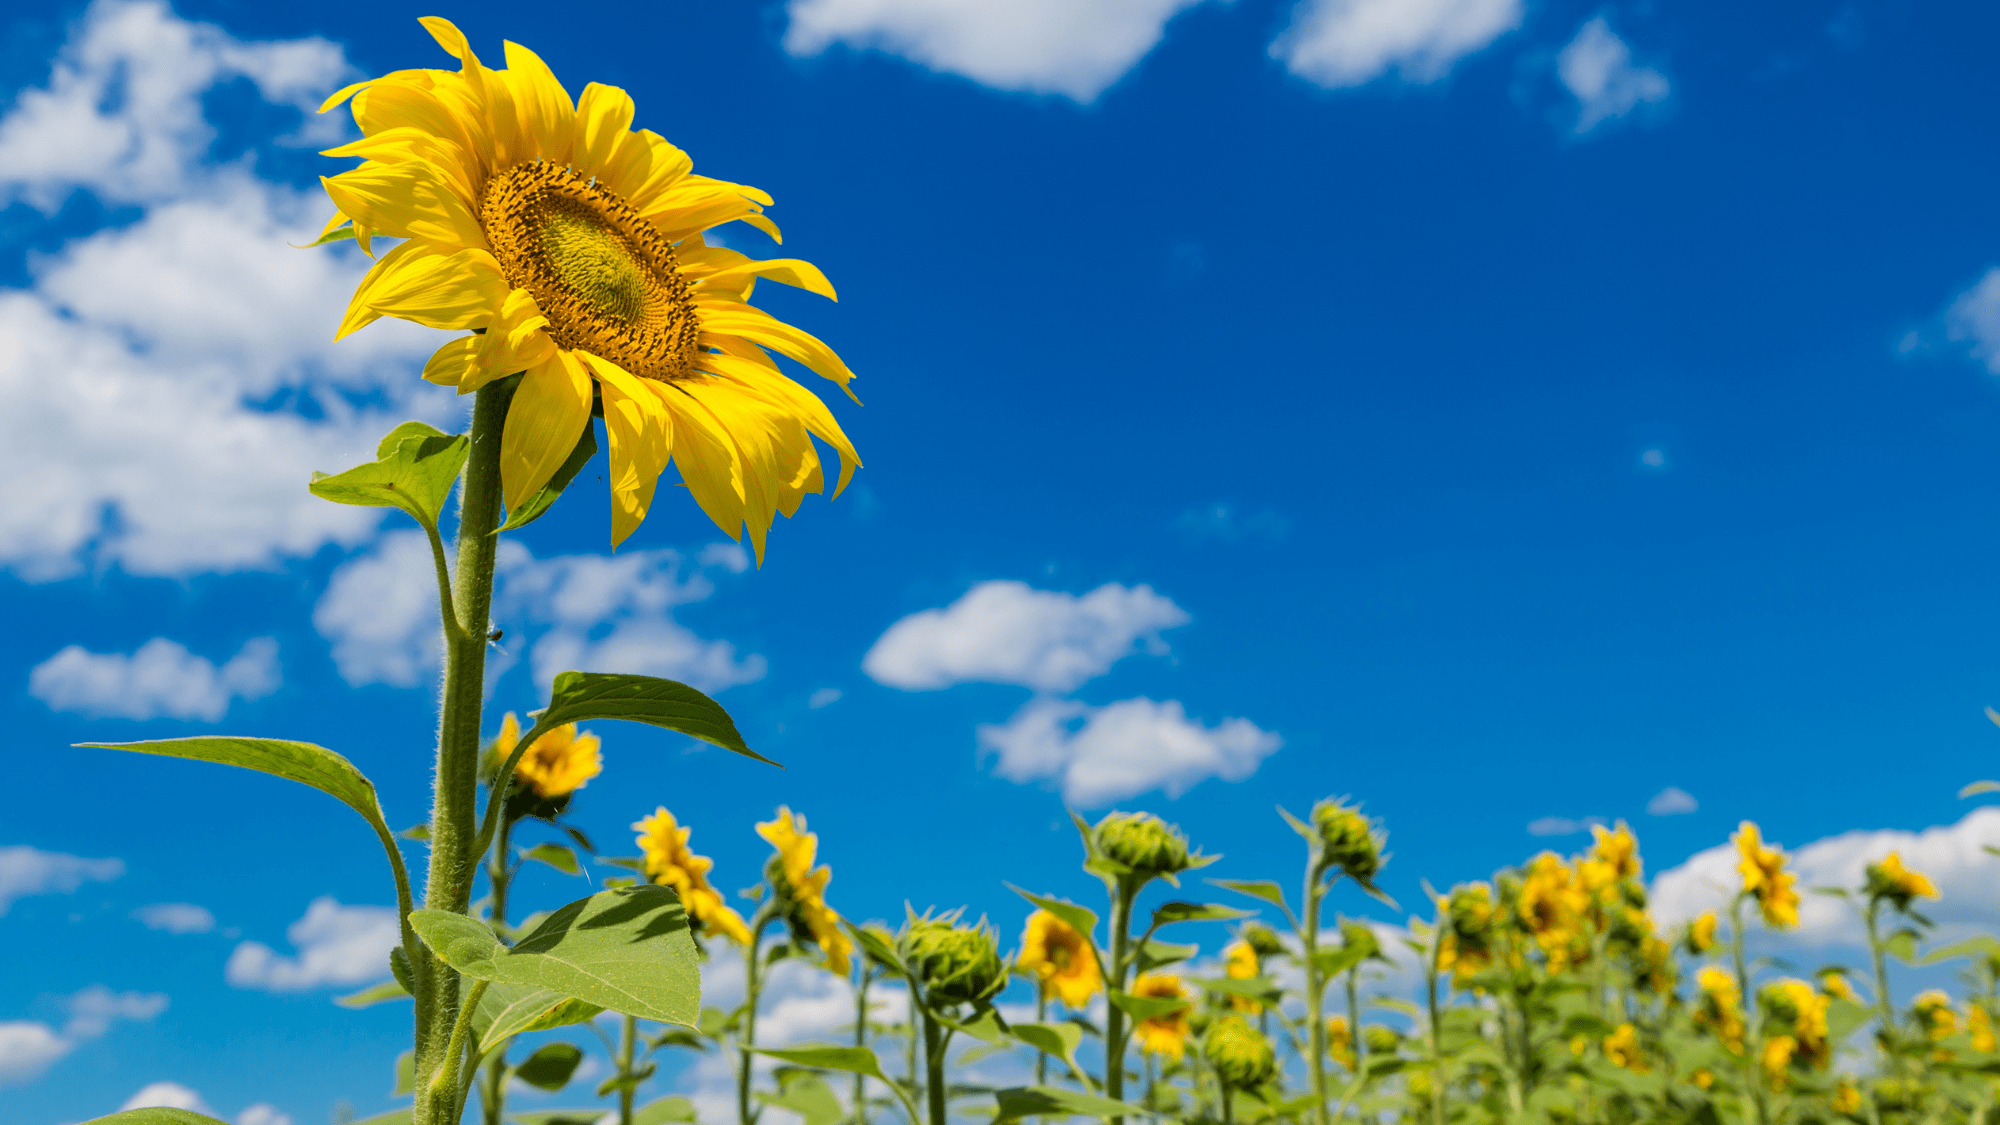 sunflowers in field facing sun